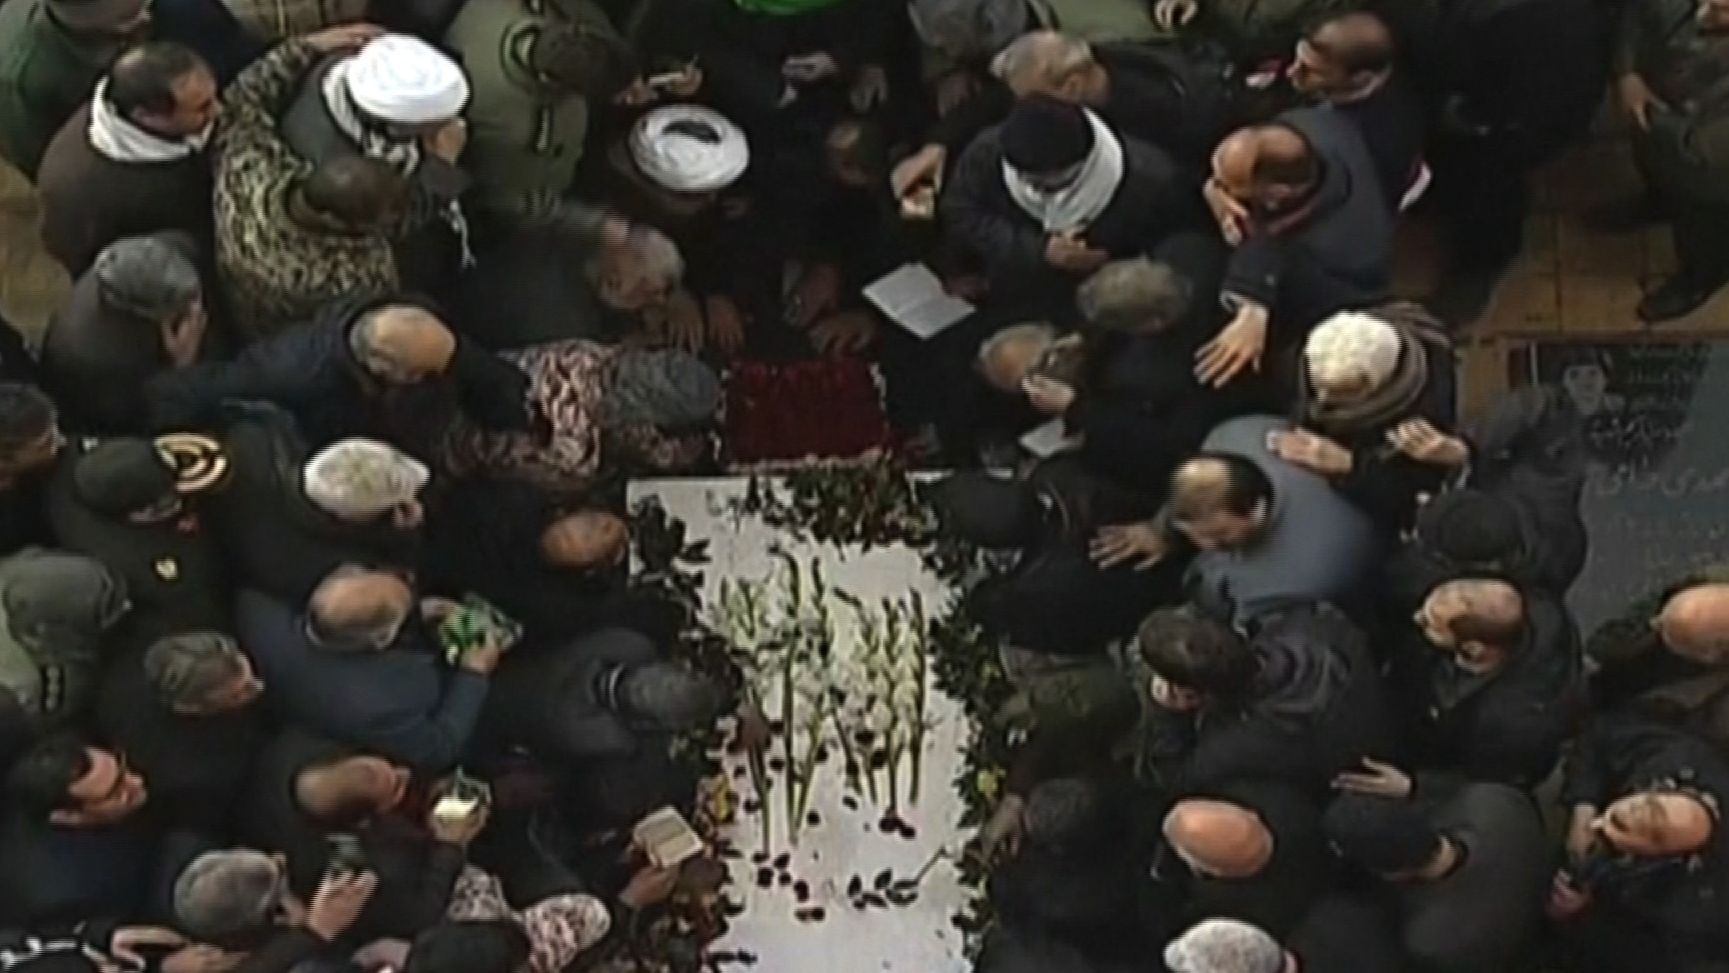 Iranian commander Qasem Soleimani's body was laid to rest in his hometown Kerman, Iran.